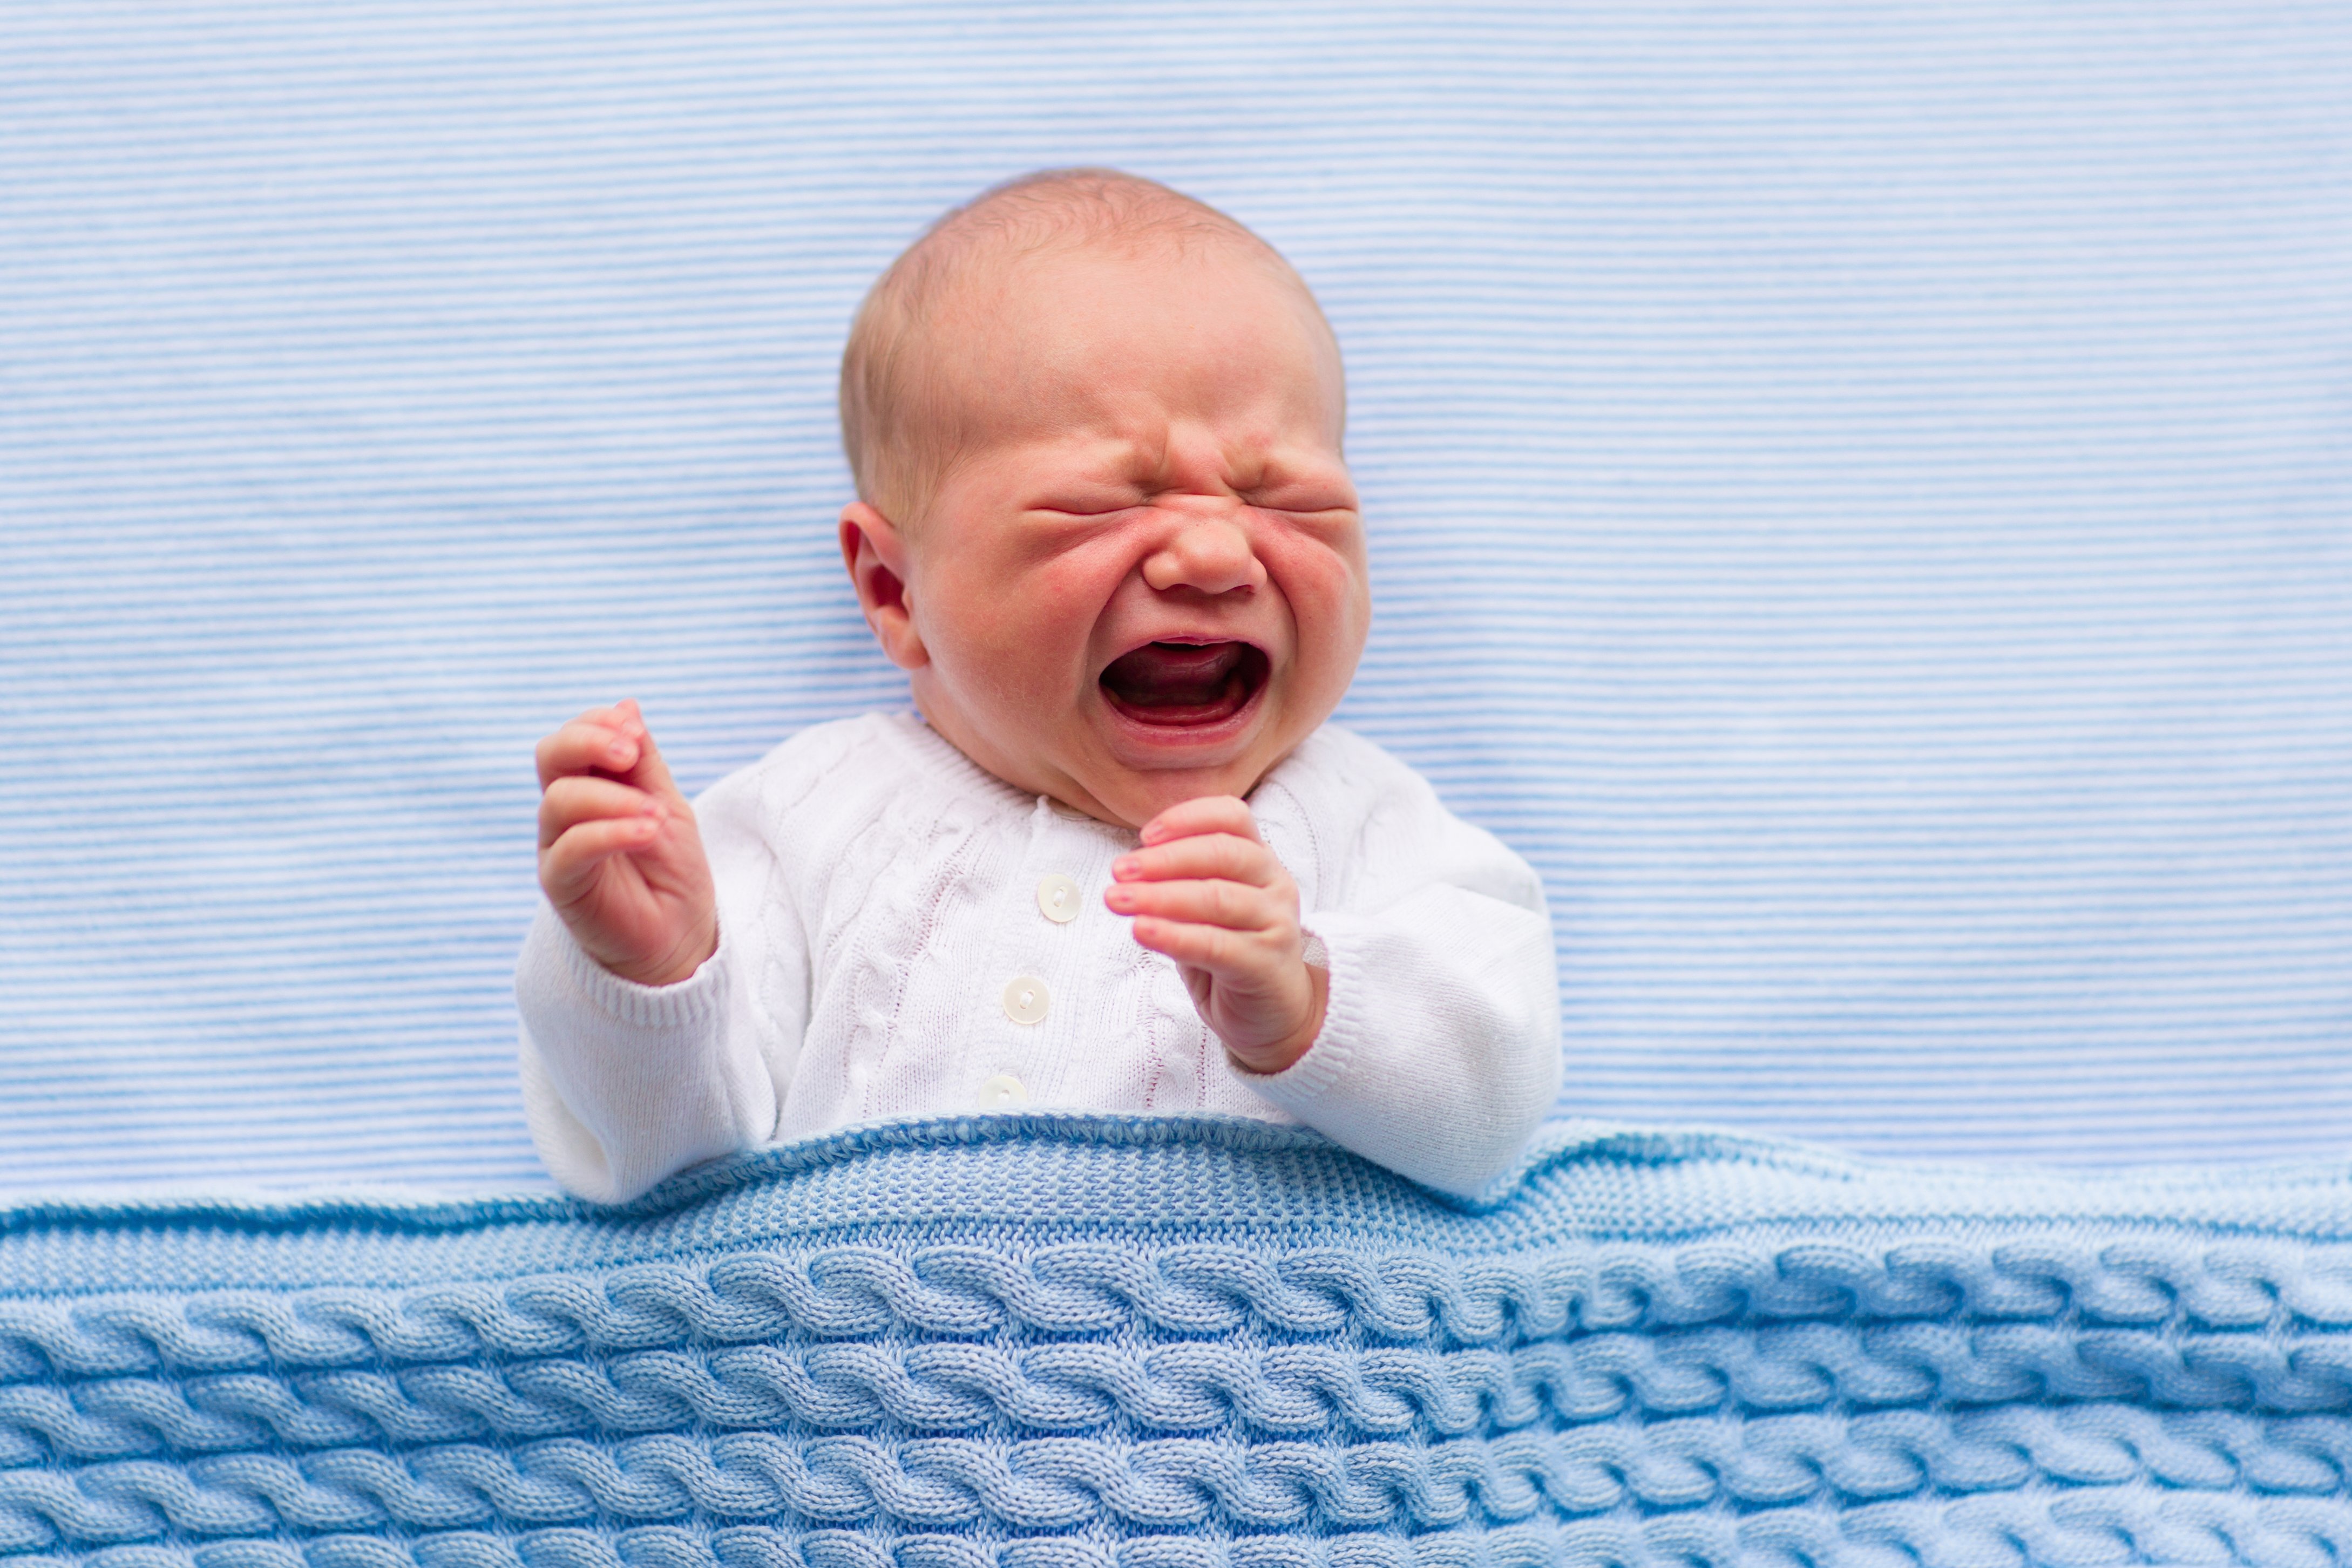 A newborn baby crying. | Photo: Shutterstock